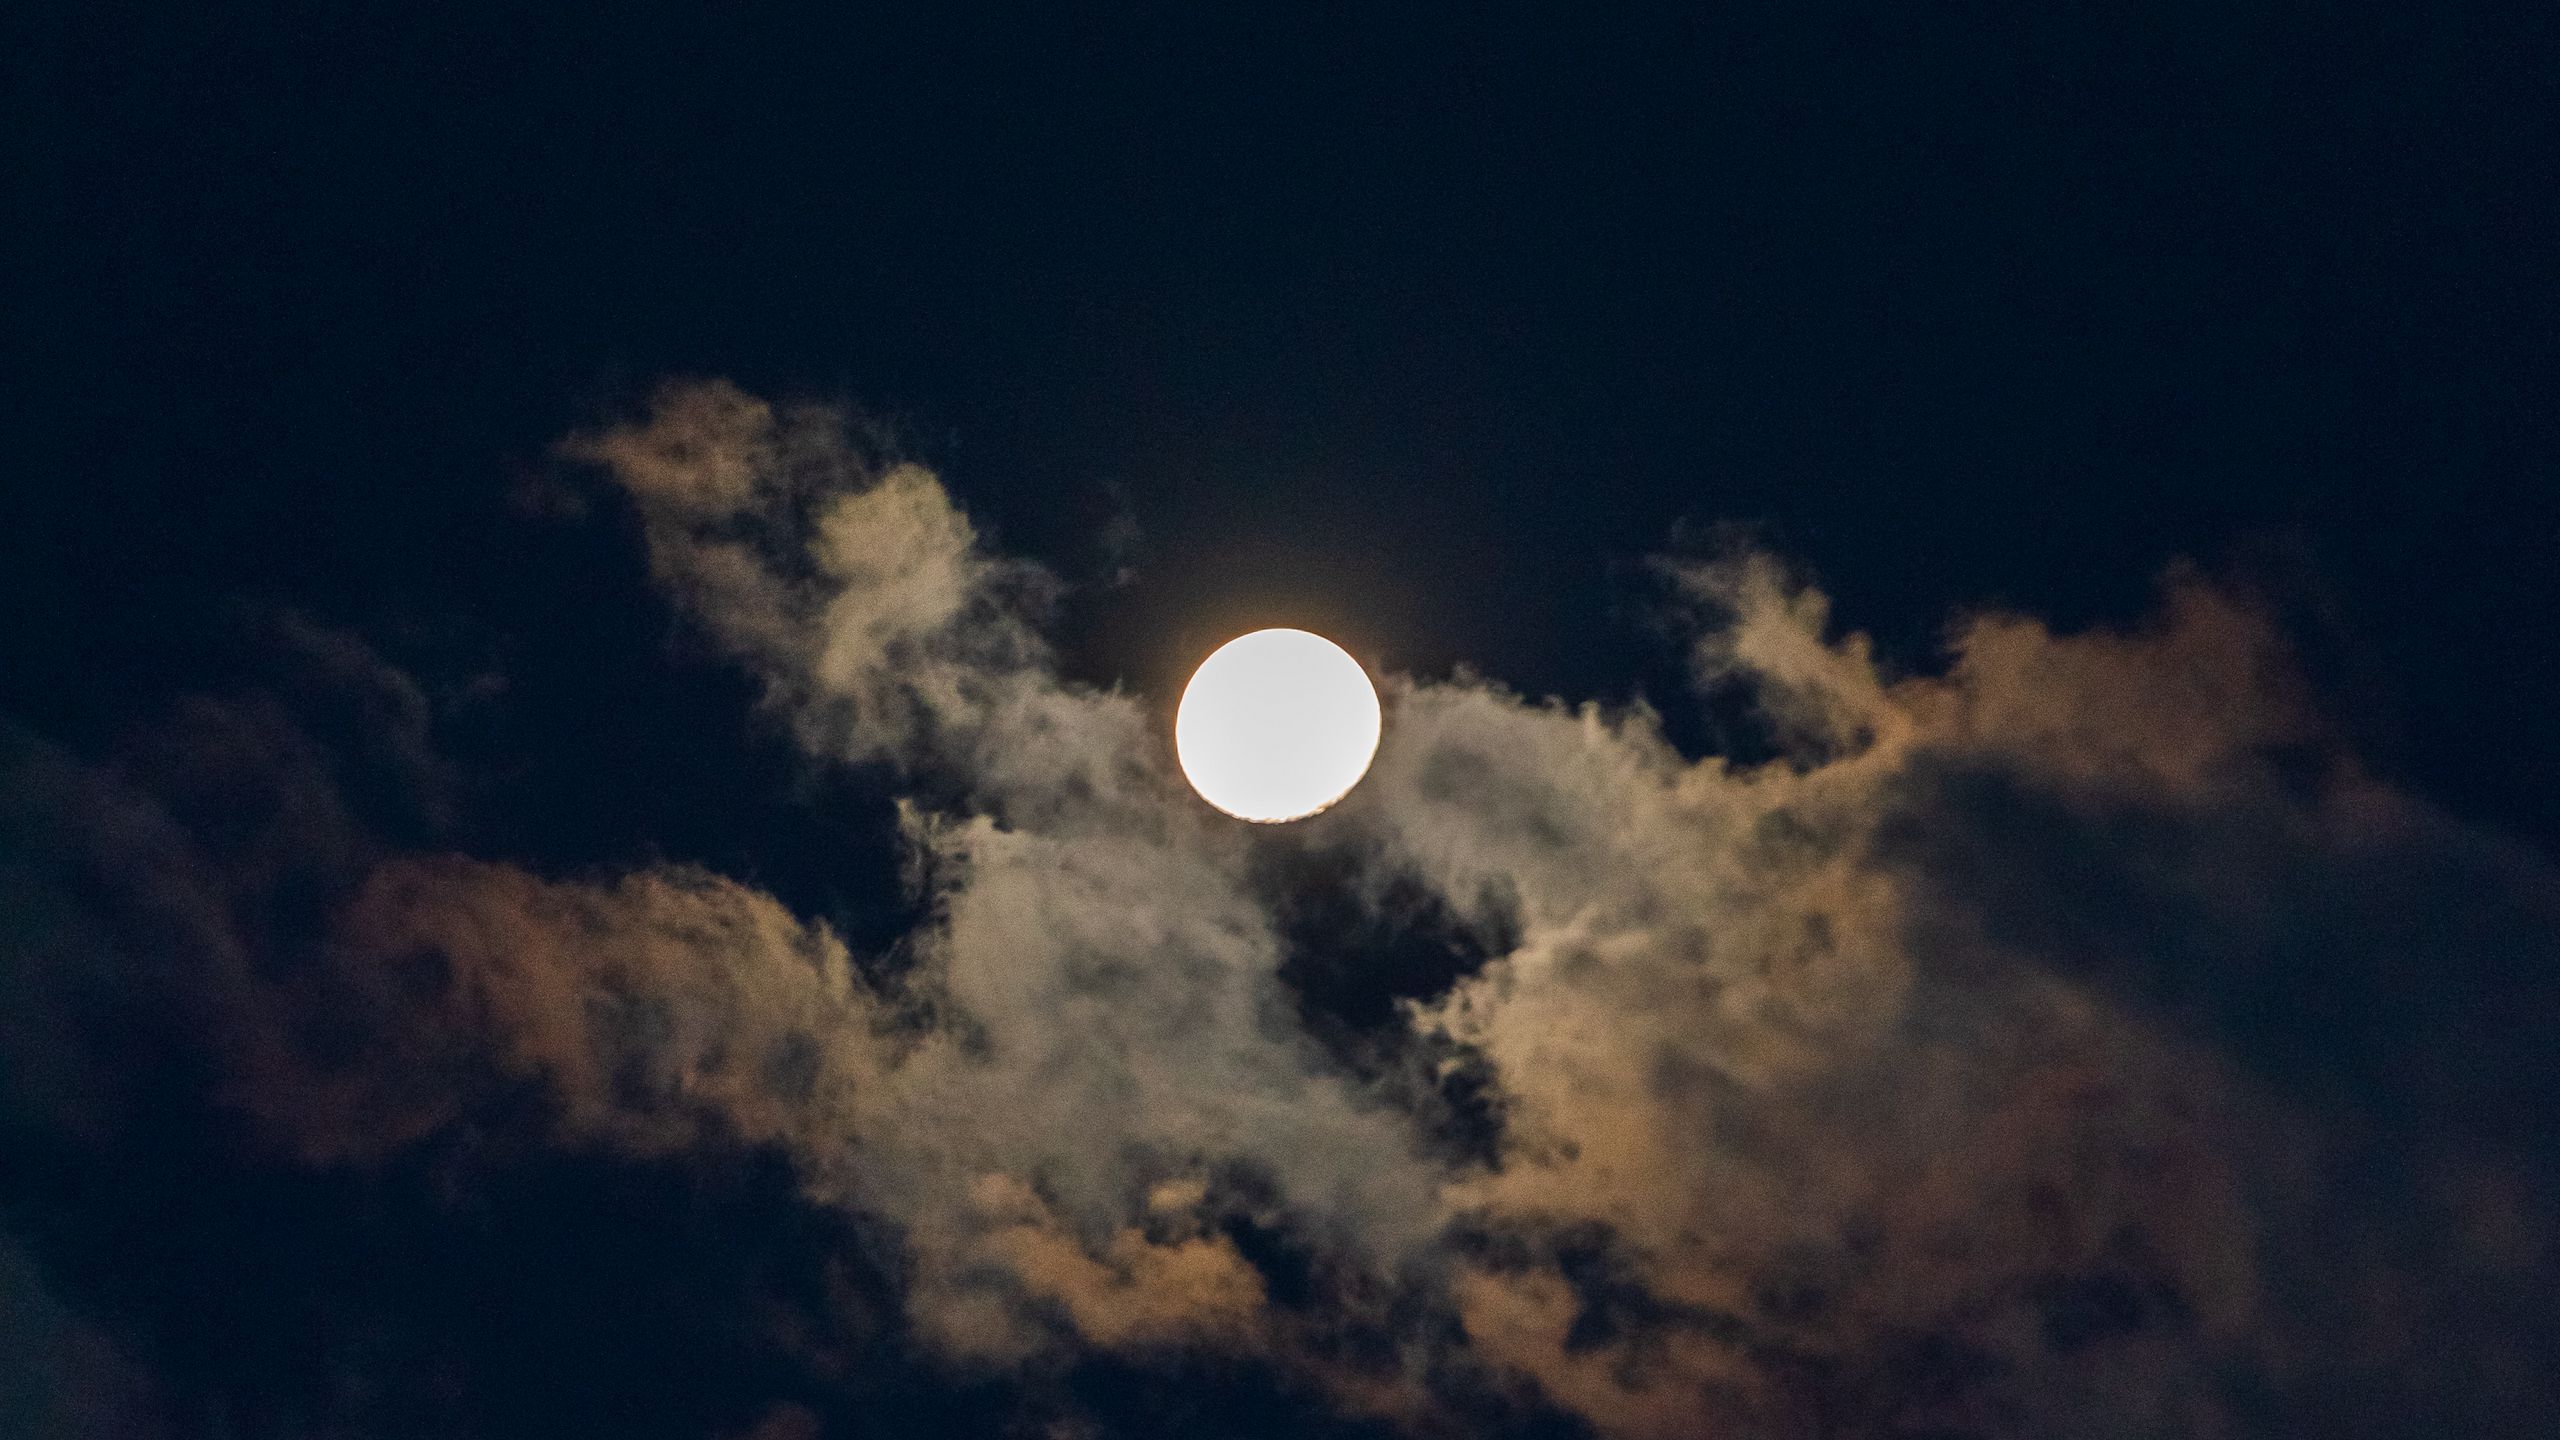 Download Wallpaper 2560x1440 Moon Full Moon Clouds Sky Night Dark